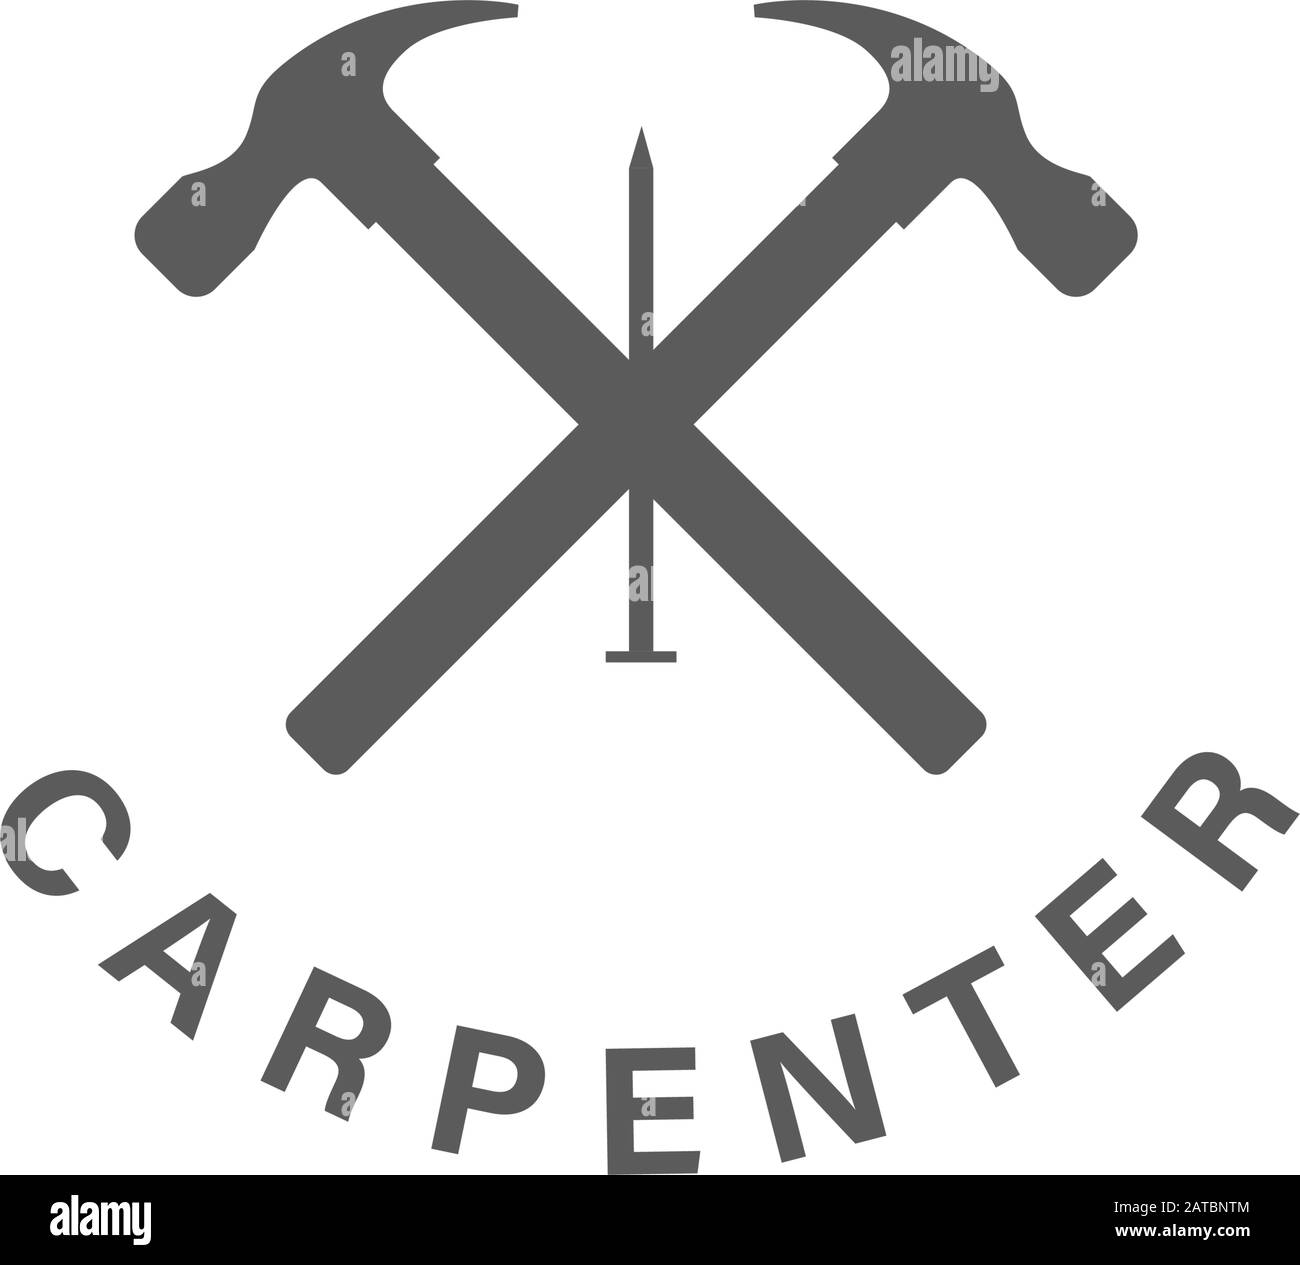 Logo design Concept about Carpenter - Fine Wood - Hand Made - Furnishing . Carpenter design element in vintage style for logo, label, badge, t-shirts. Stock Vector